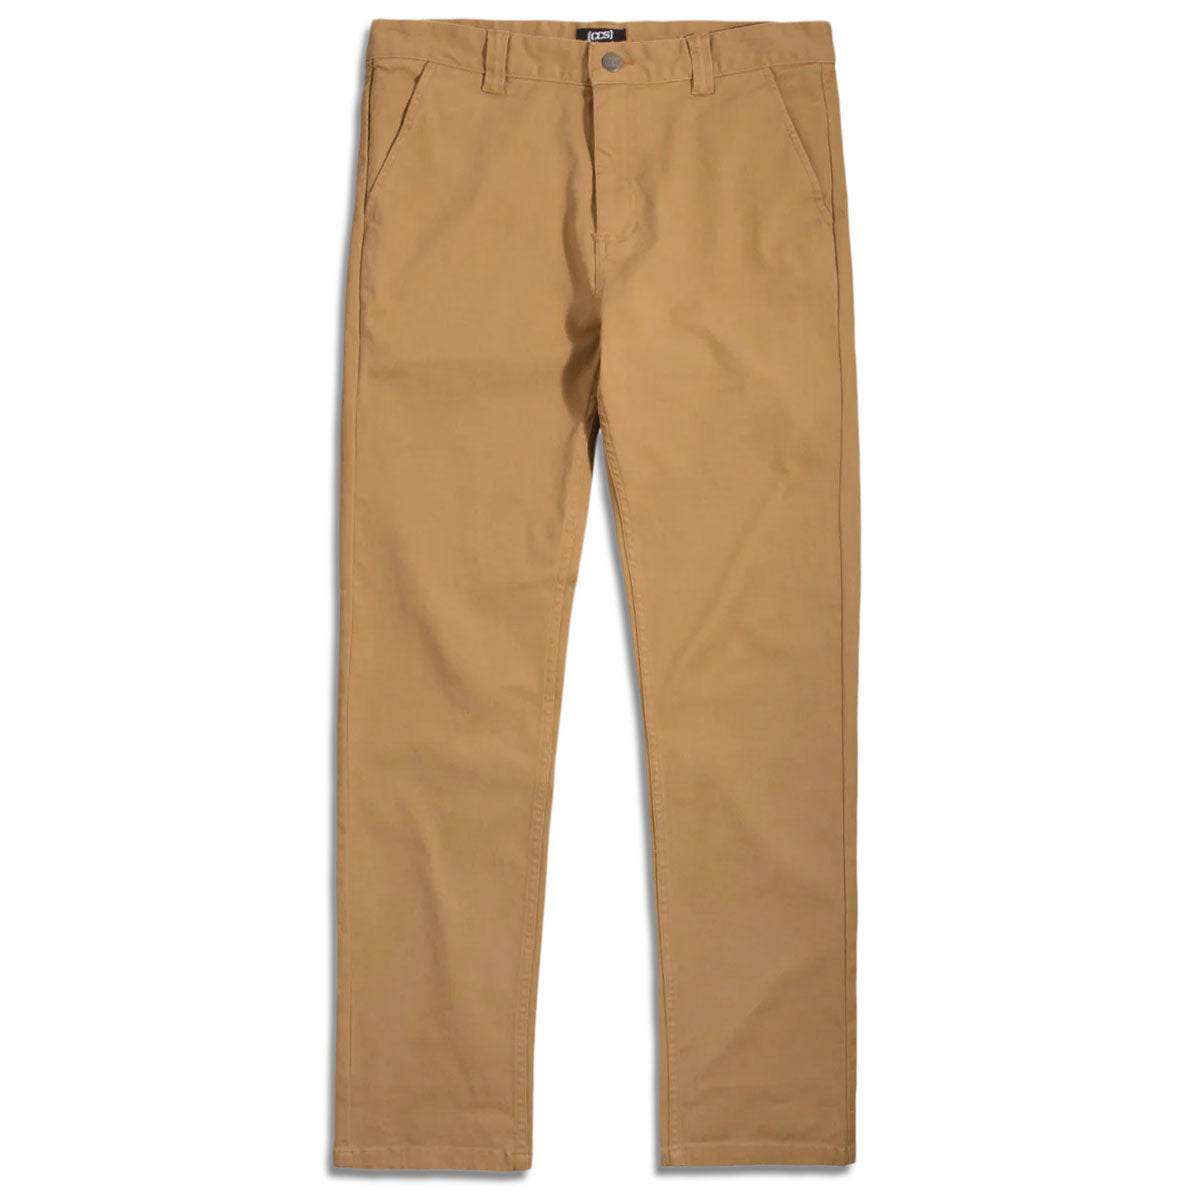 CCS Standard Plus Slim Chino Pants - Khaki image 5